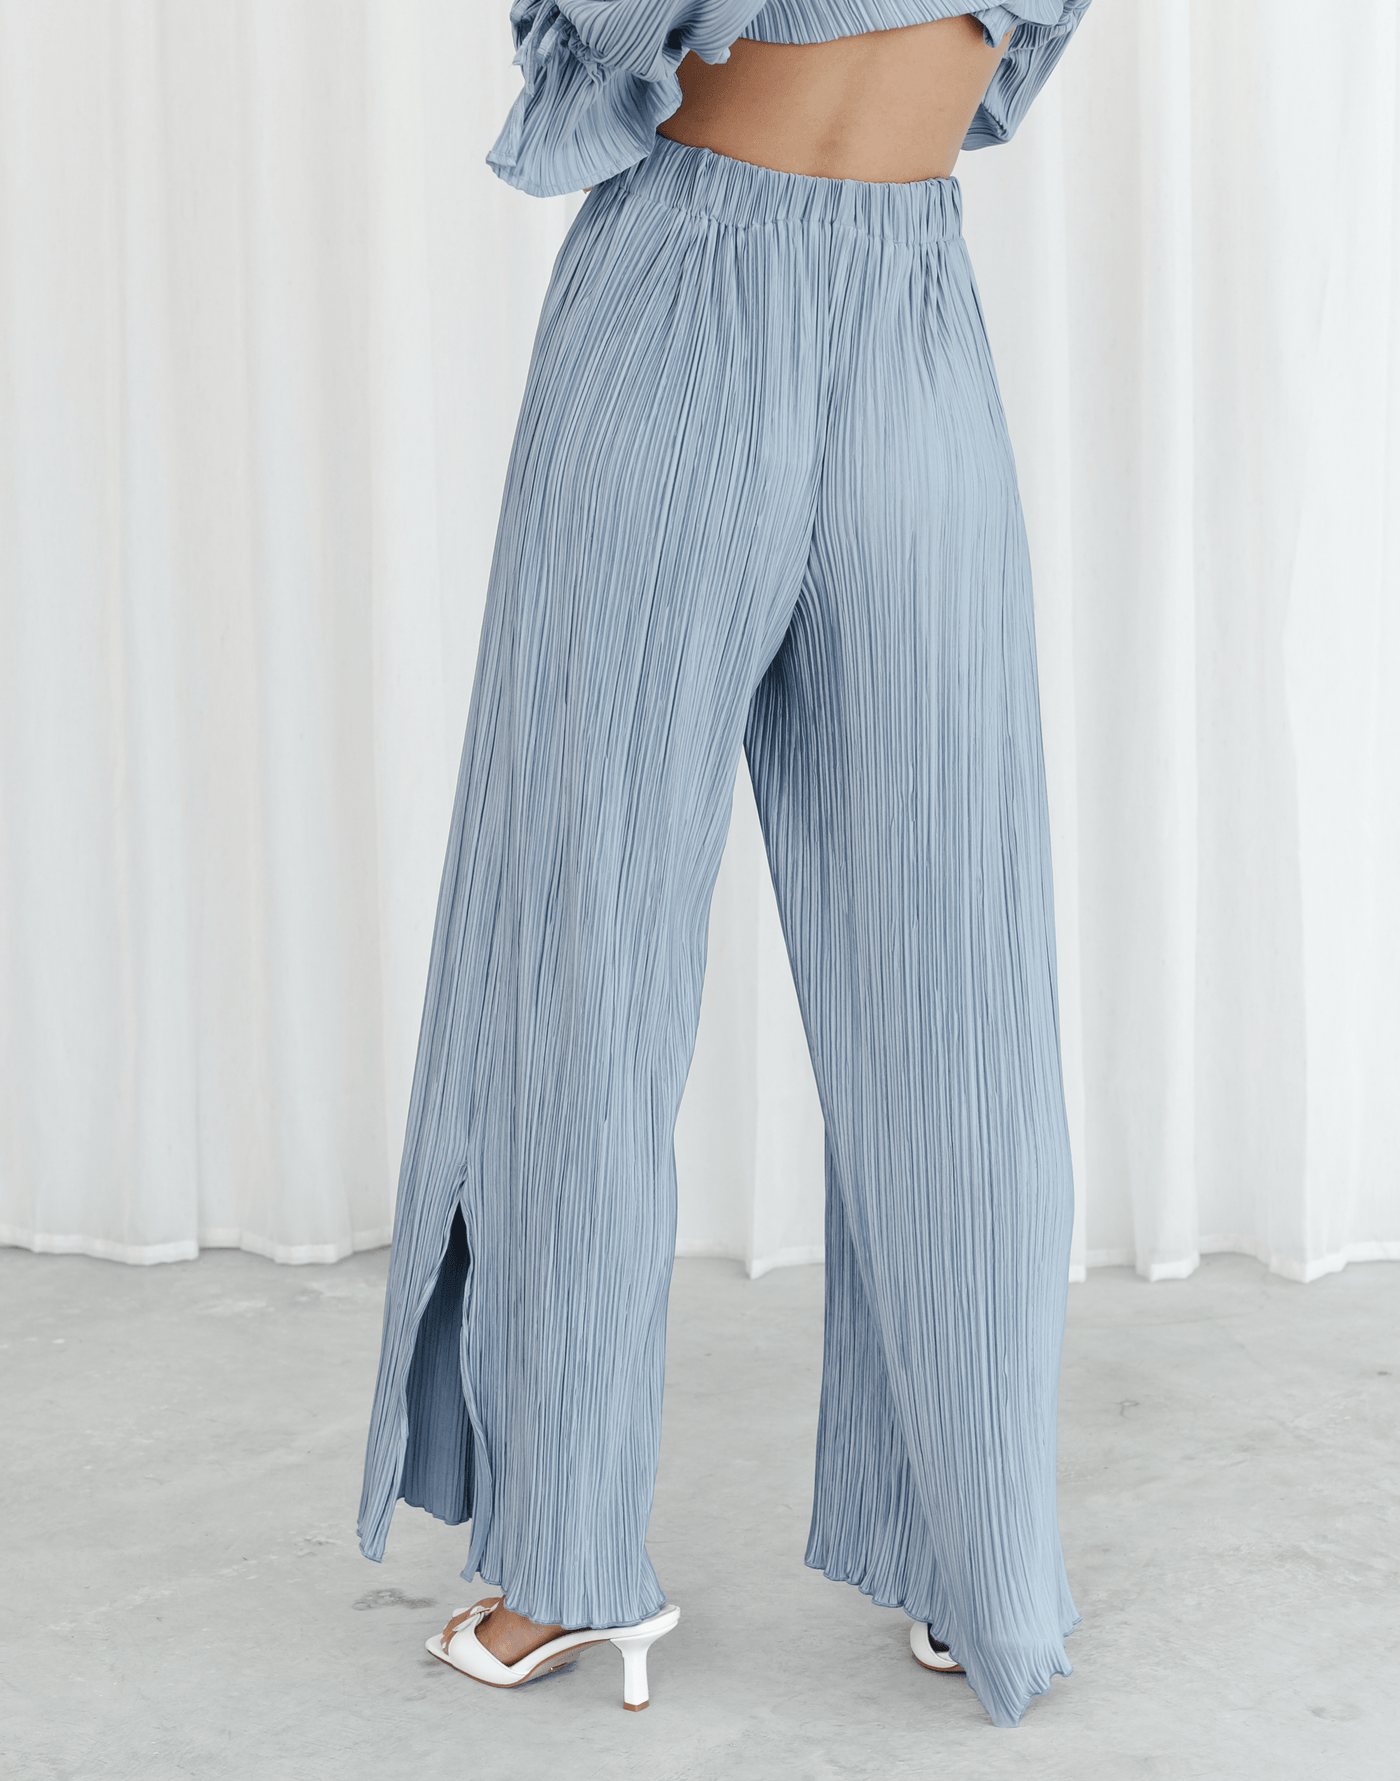 Sweet Serenity Pants (Steel Blue) - Blue Pleated Pants - Women's Pants - Charcoal Clothing